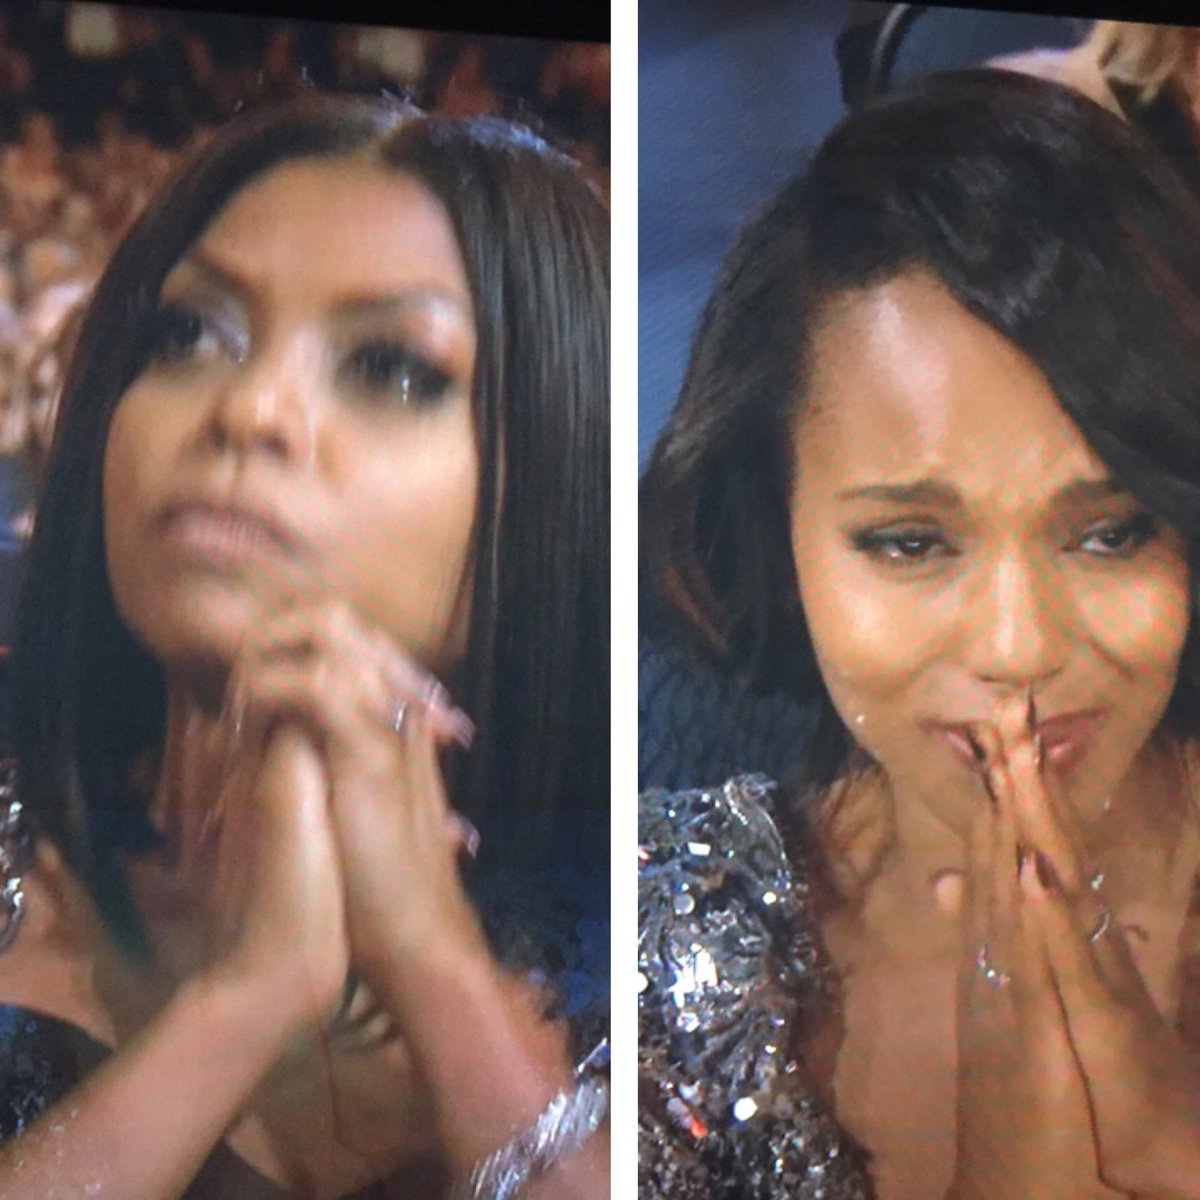 RT @TVLine: .@TherealTaraji & @kerrywashington react to @violadavis' #Emmys speech http://t.co/3hH0eWoxuJ